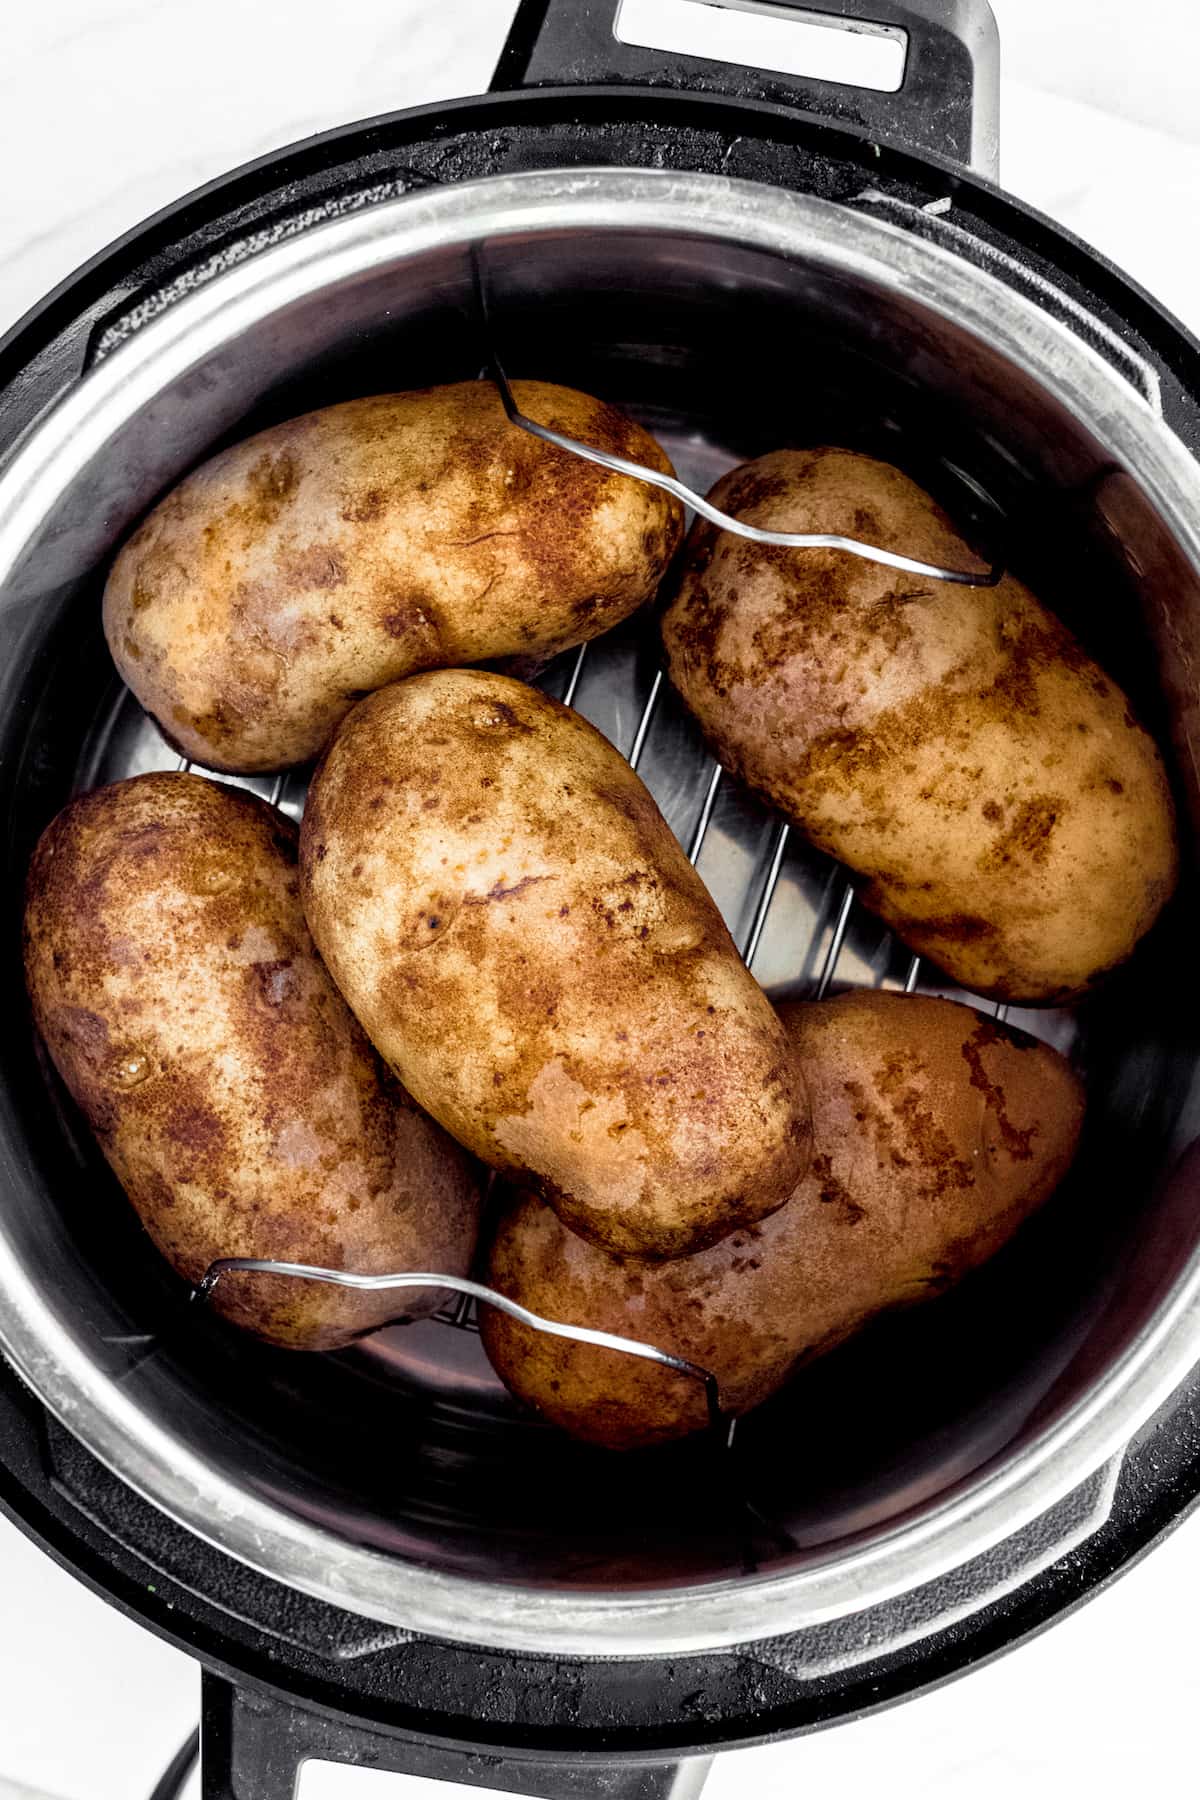 Five Large Russet Potatoes Inside of an Instant Pot